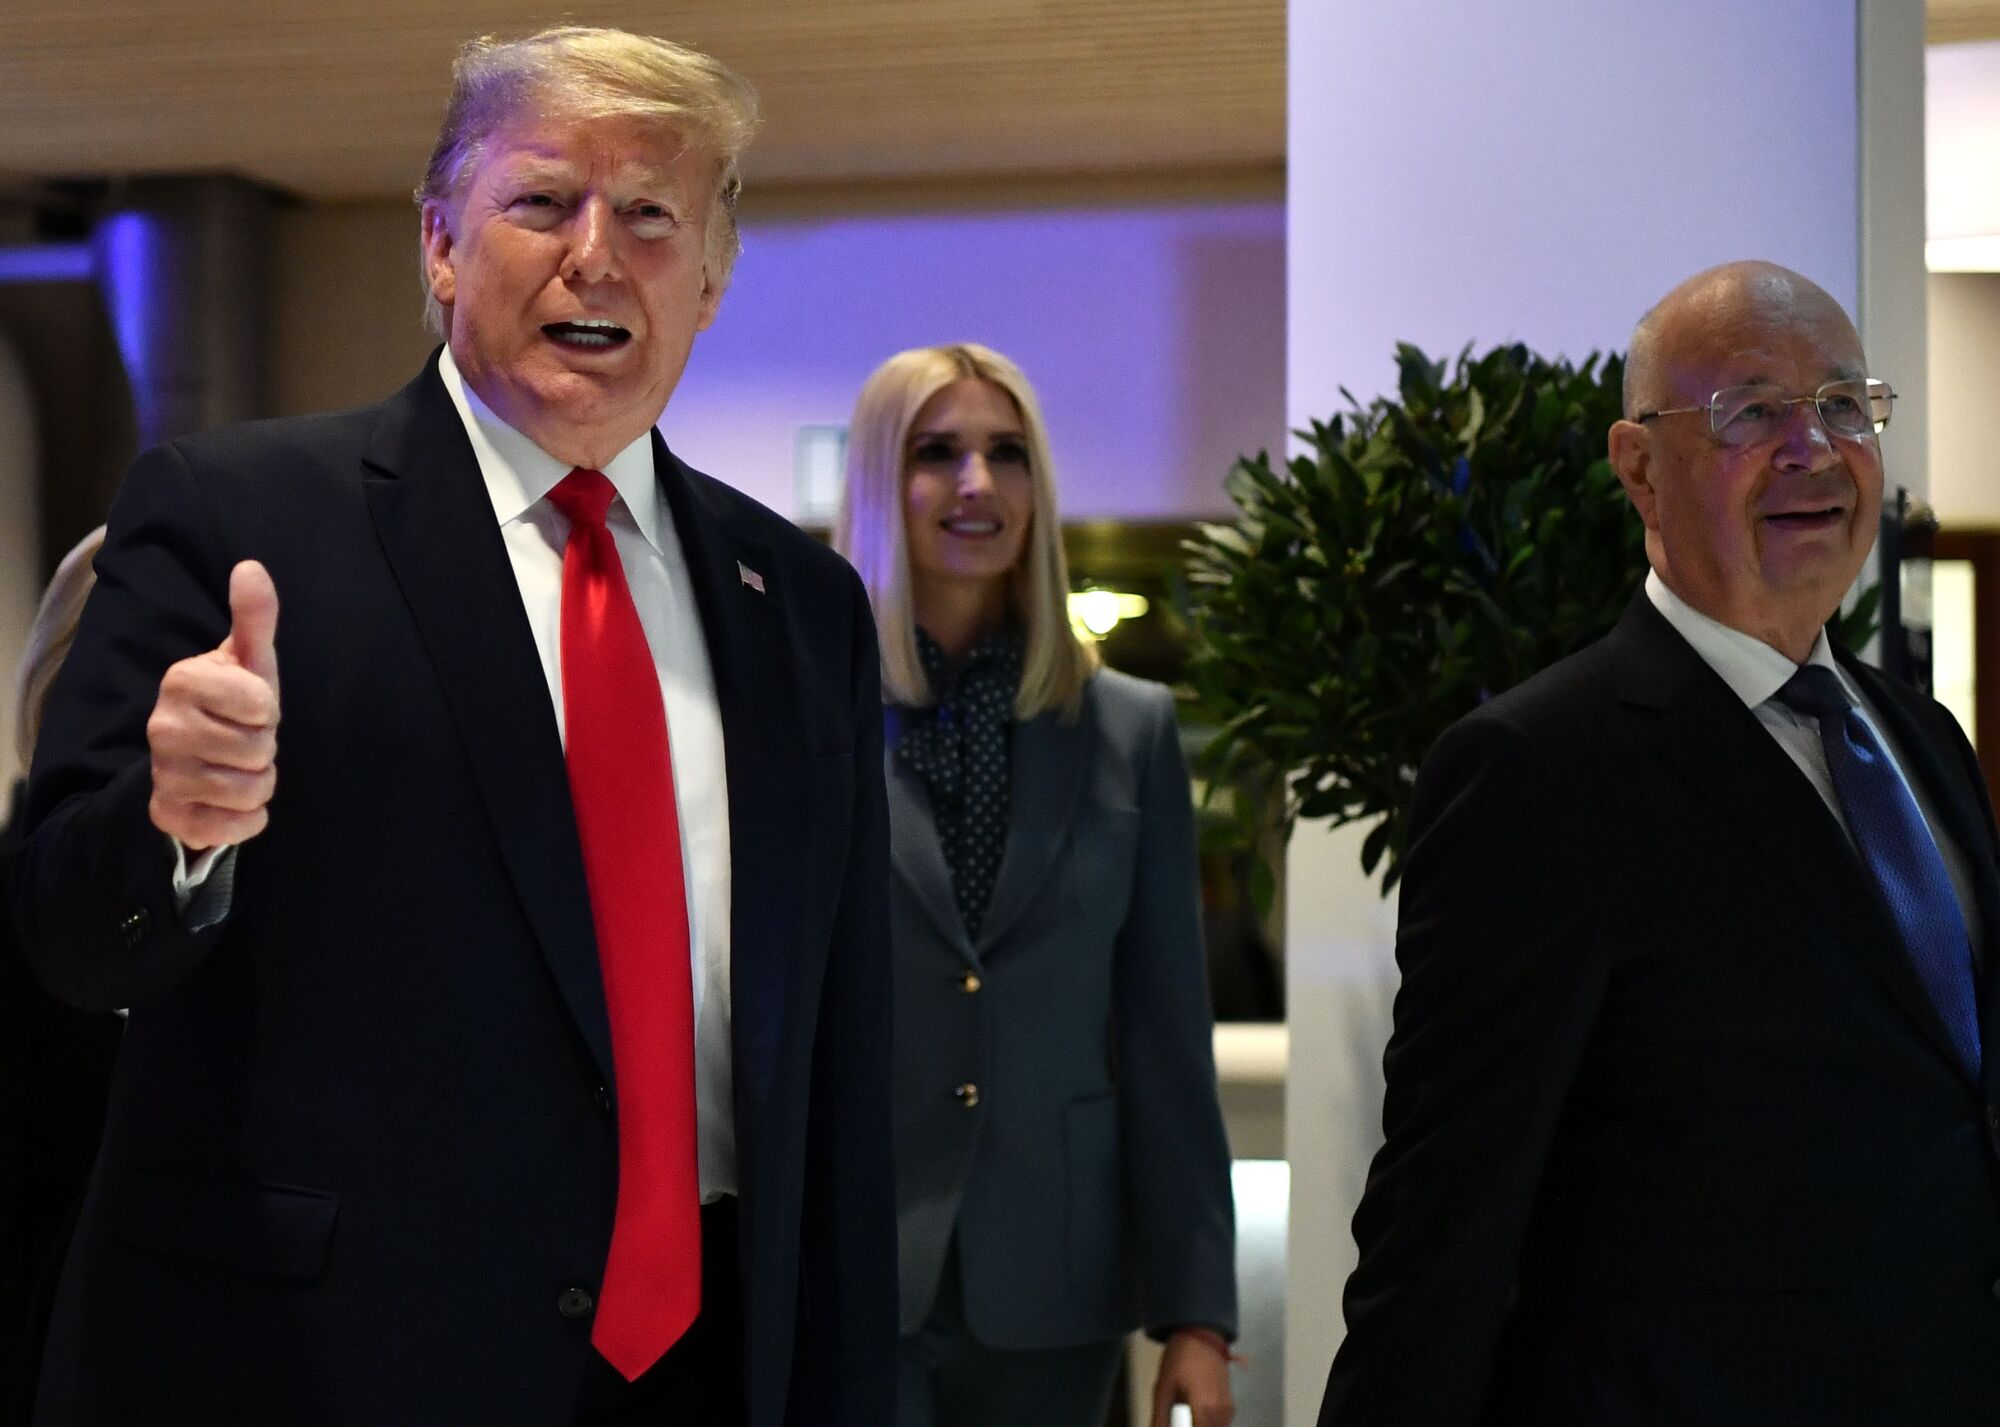 President Trump during the World Economic Forum in Davos, Switzerland